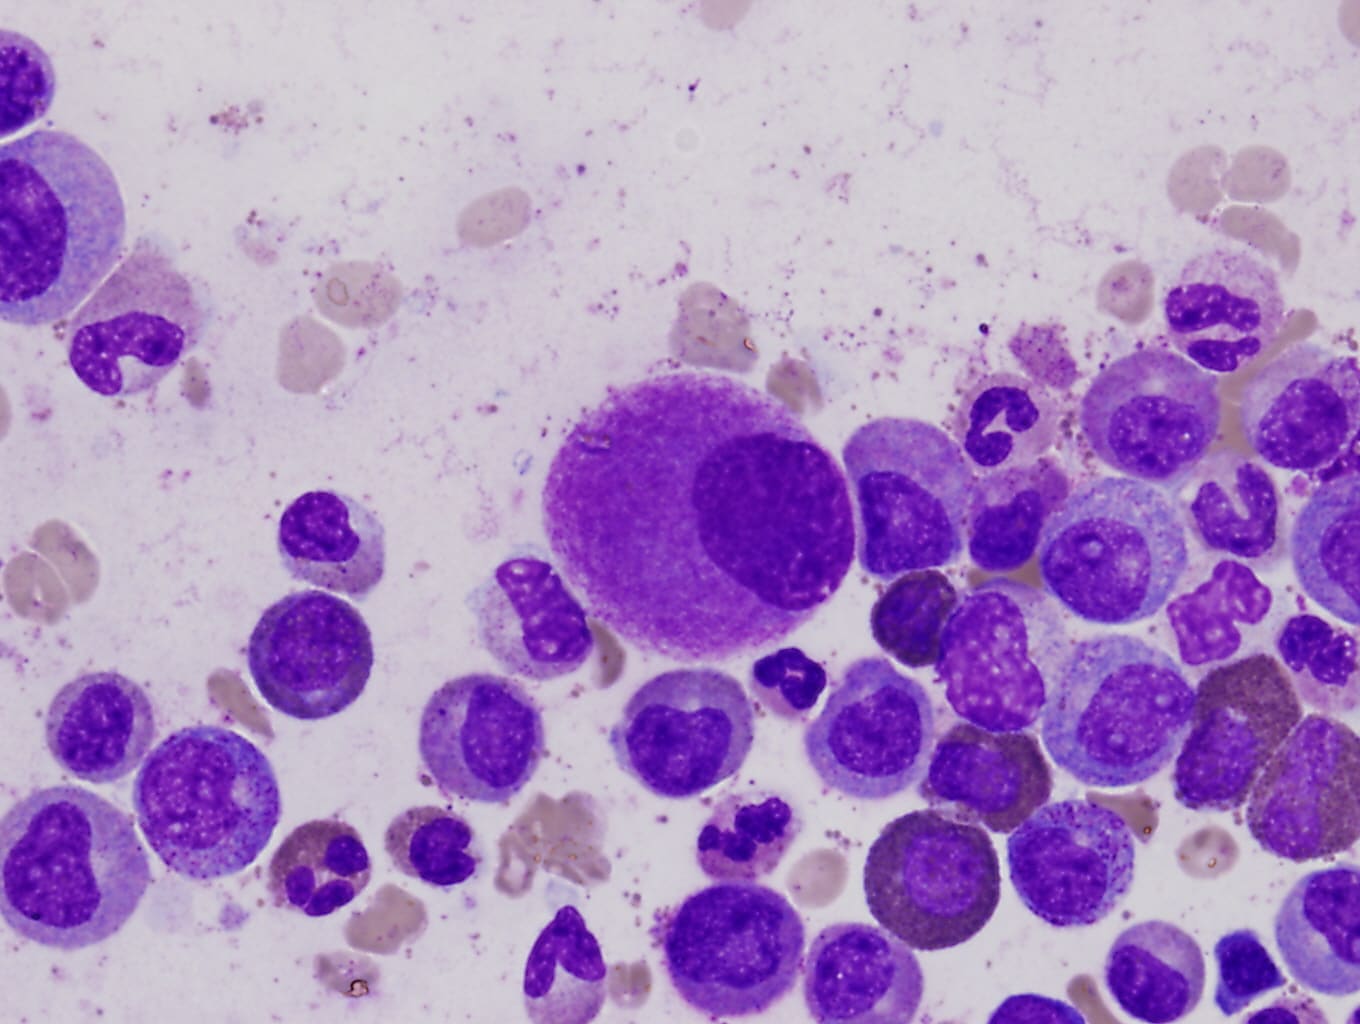 A small, hypolobated megakaryocyte (center of field) in a bone marrow aspirate, characteristic of chronic myeloid leukemia. CREDIT: Difu Wu, https://commons.wikimedia.org/wiki/File:Hypolobated_small_megakaryocyte.jpg